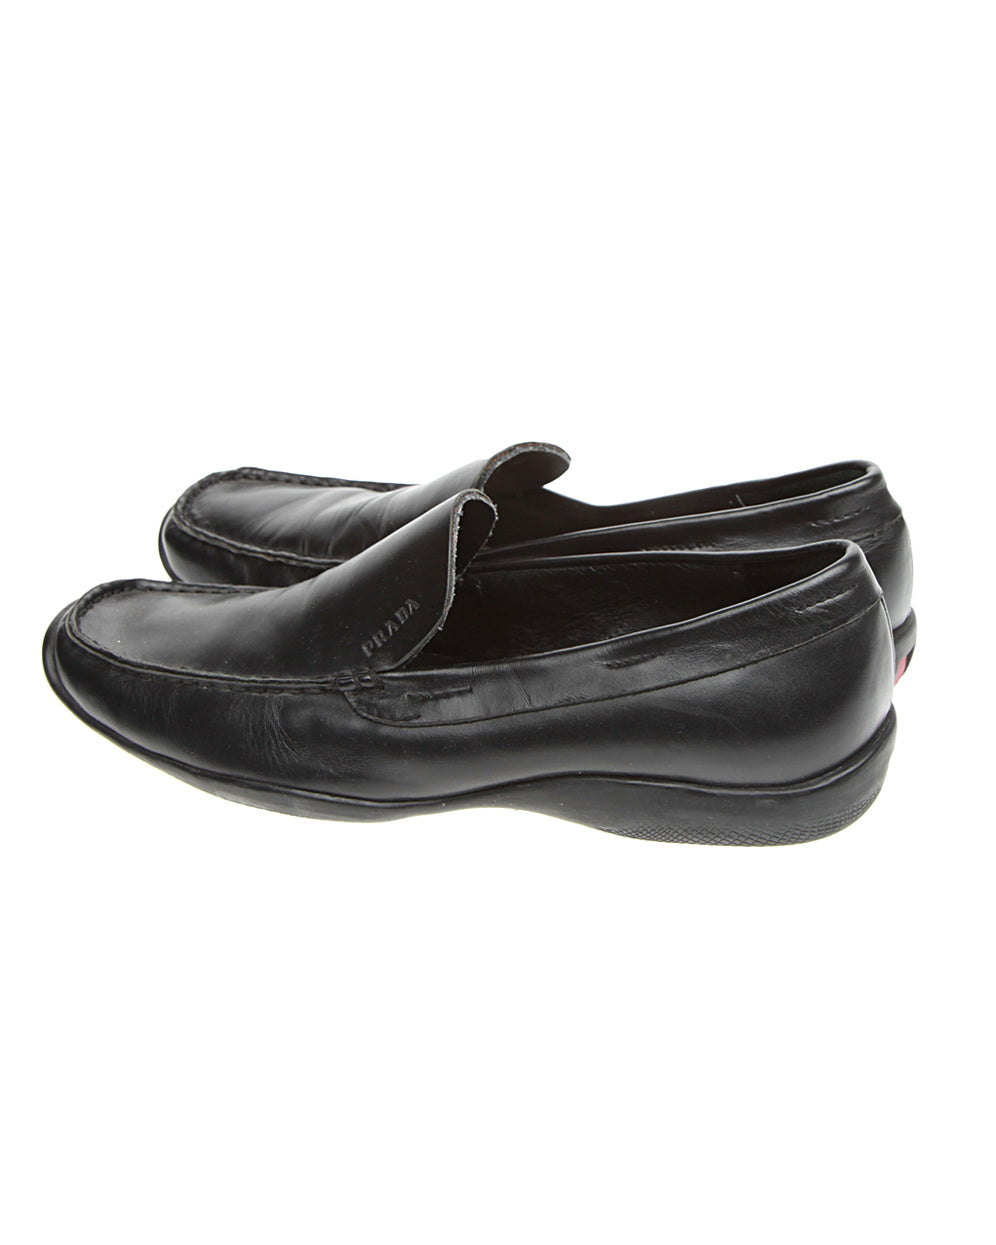 Prada Black Leather Loafers - UK 6